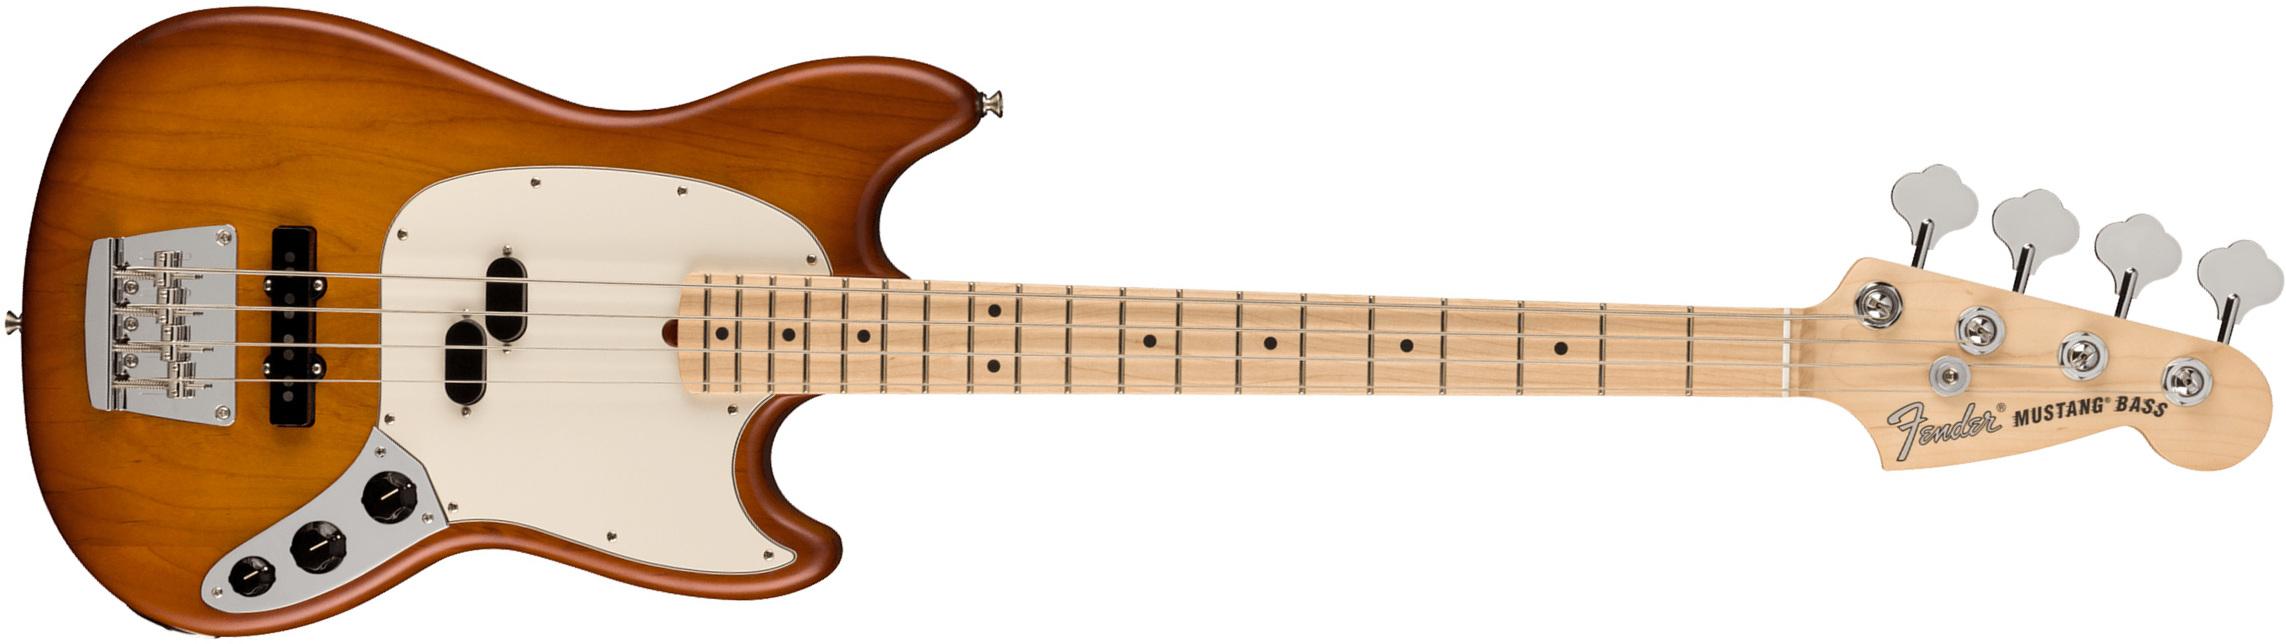 Fender Mustang Bass American Performer Ltd Usa Rw - Honey Burst Satin - Basse Électrique Solid Body - Main picture